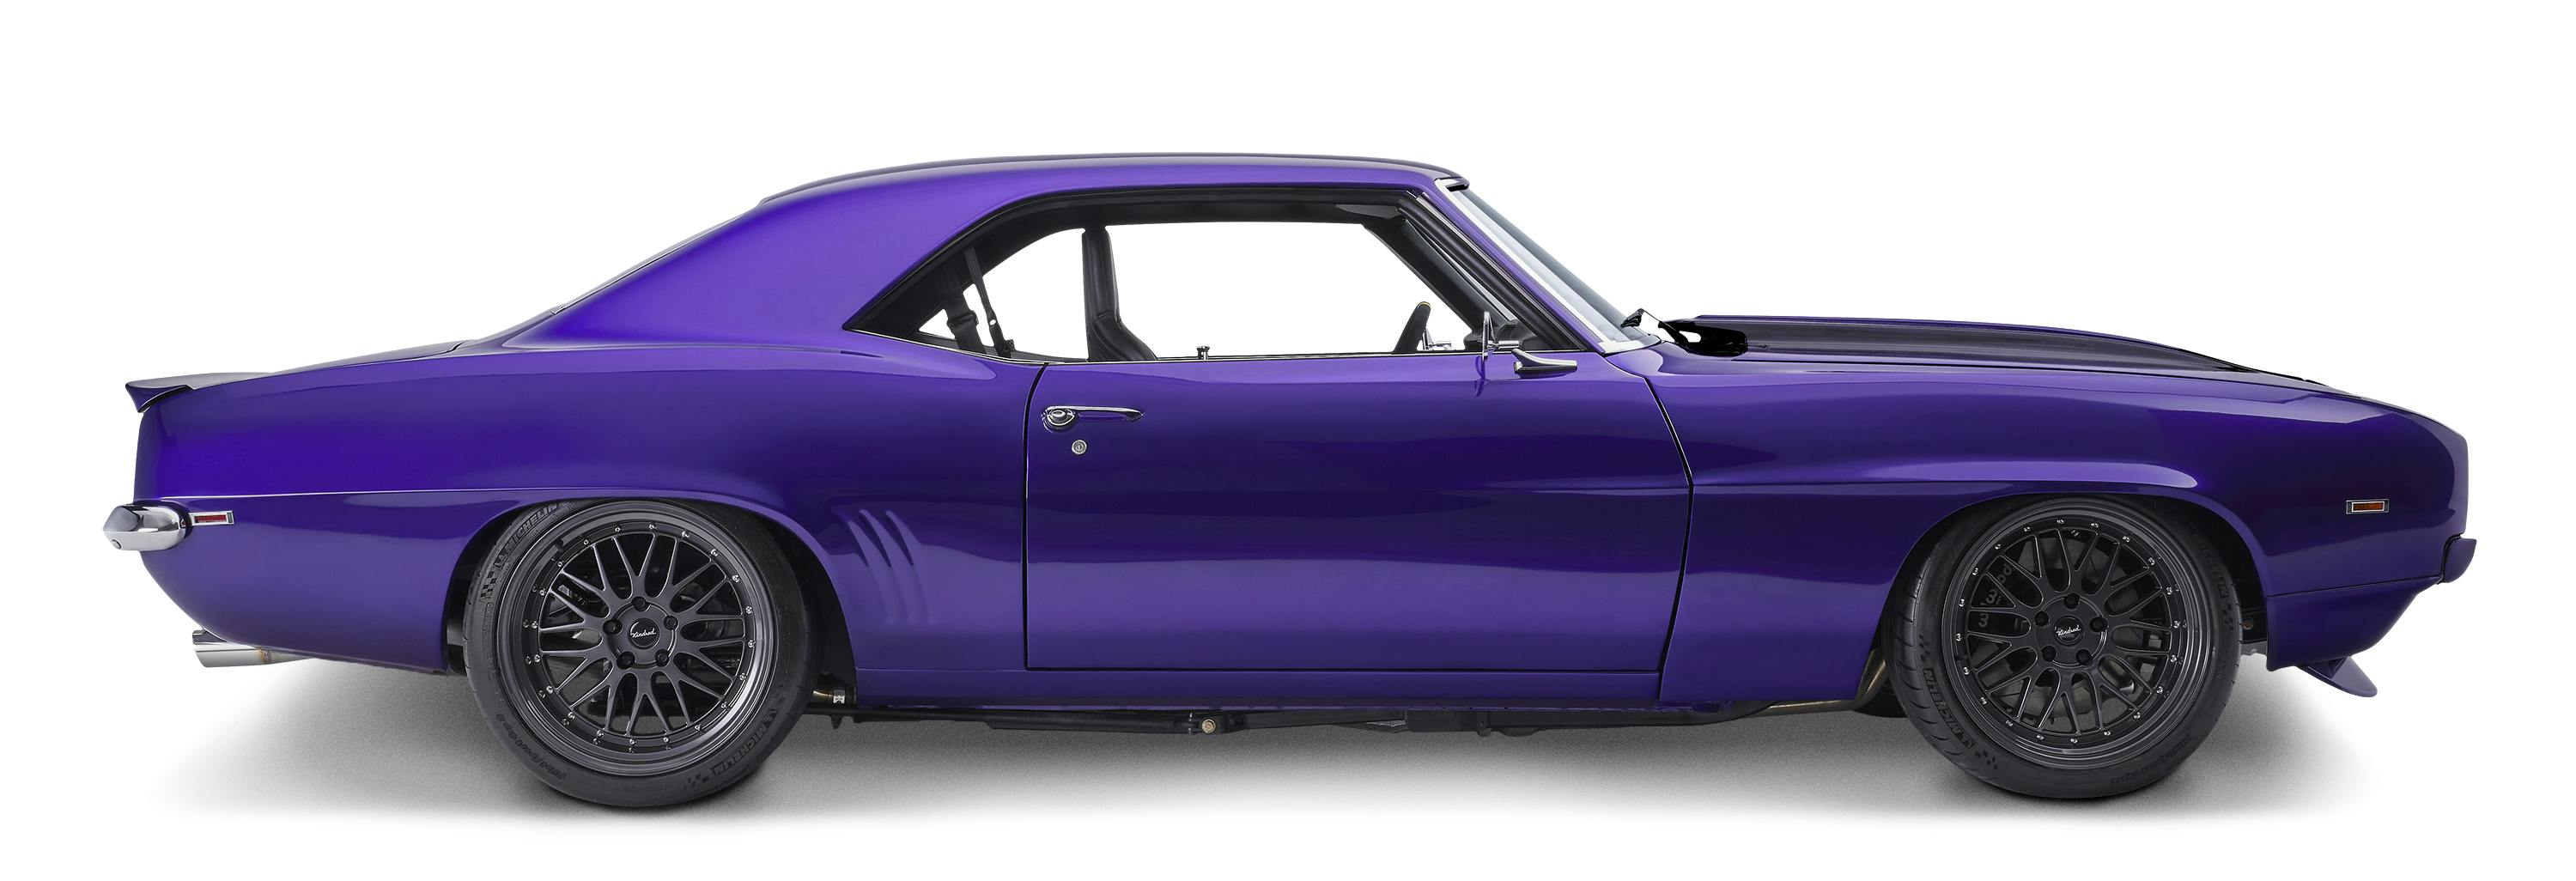 Camaro Profile Passenger Daytona Violet